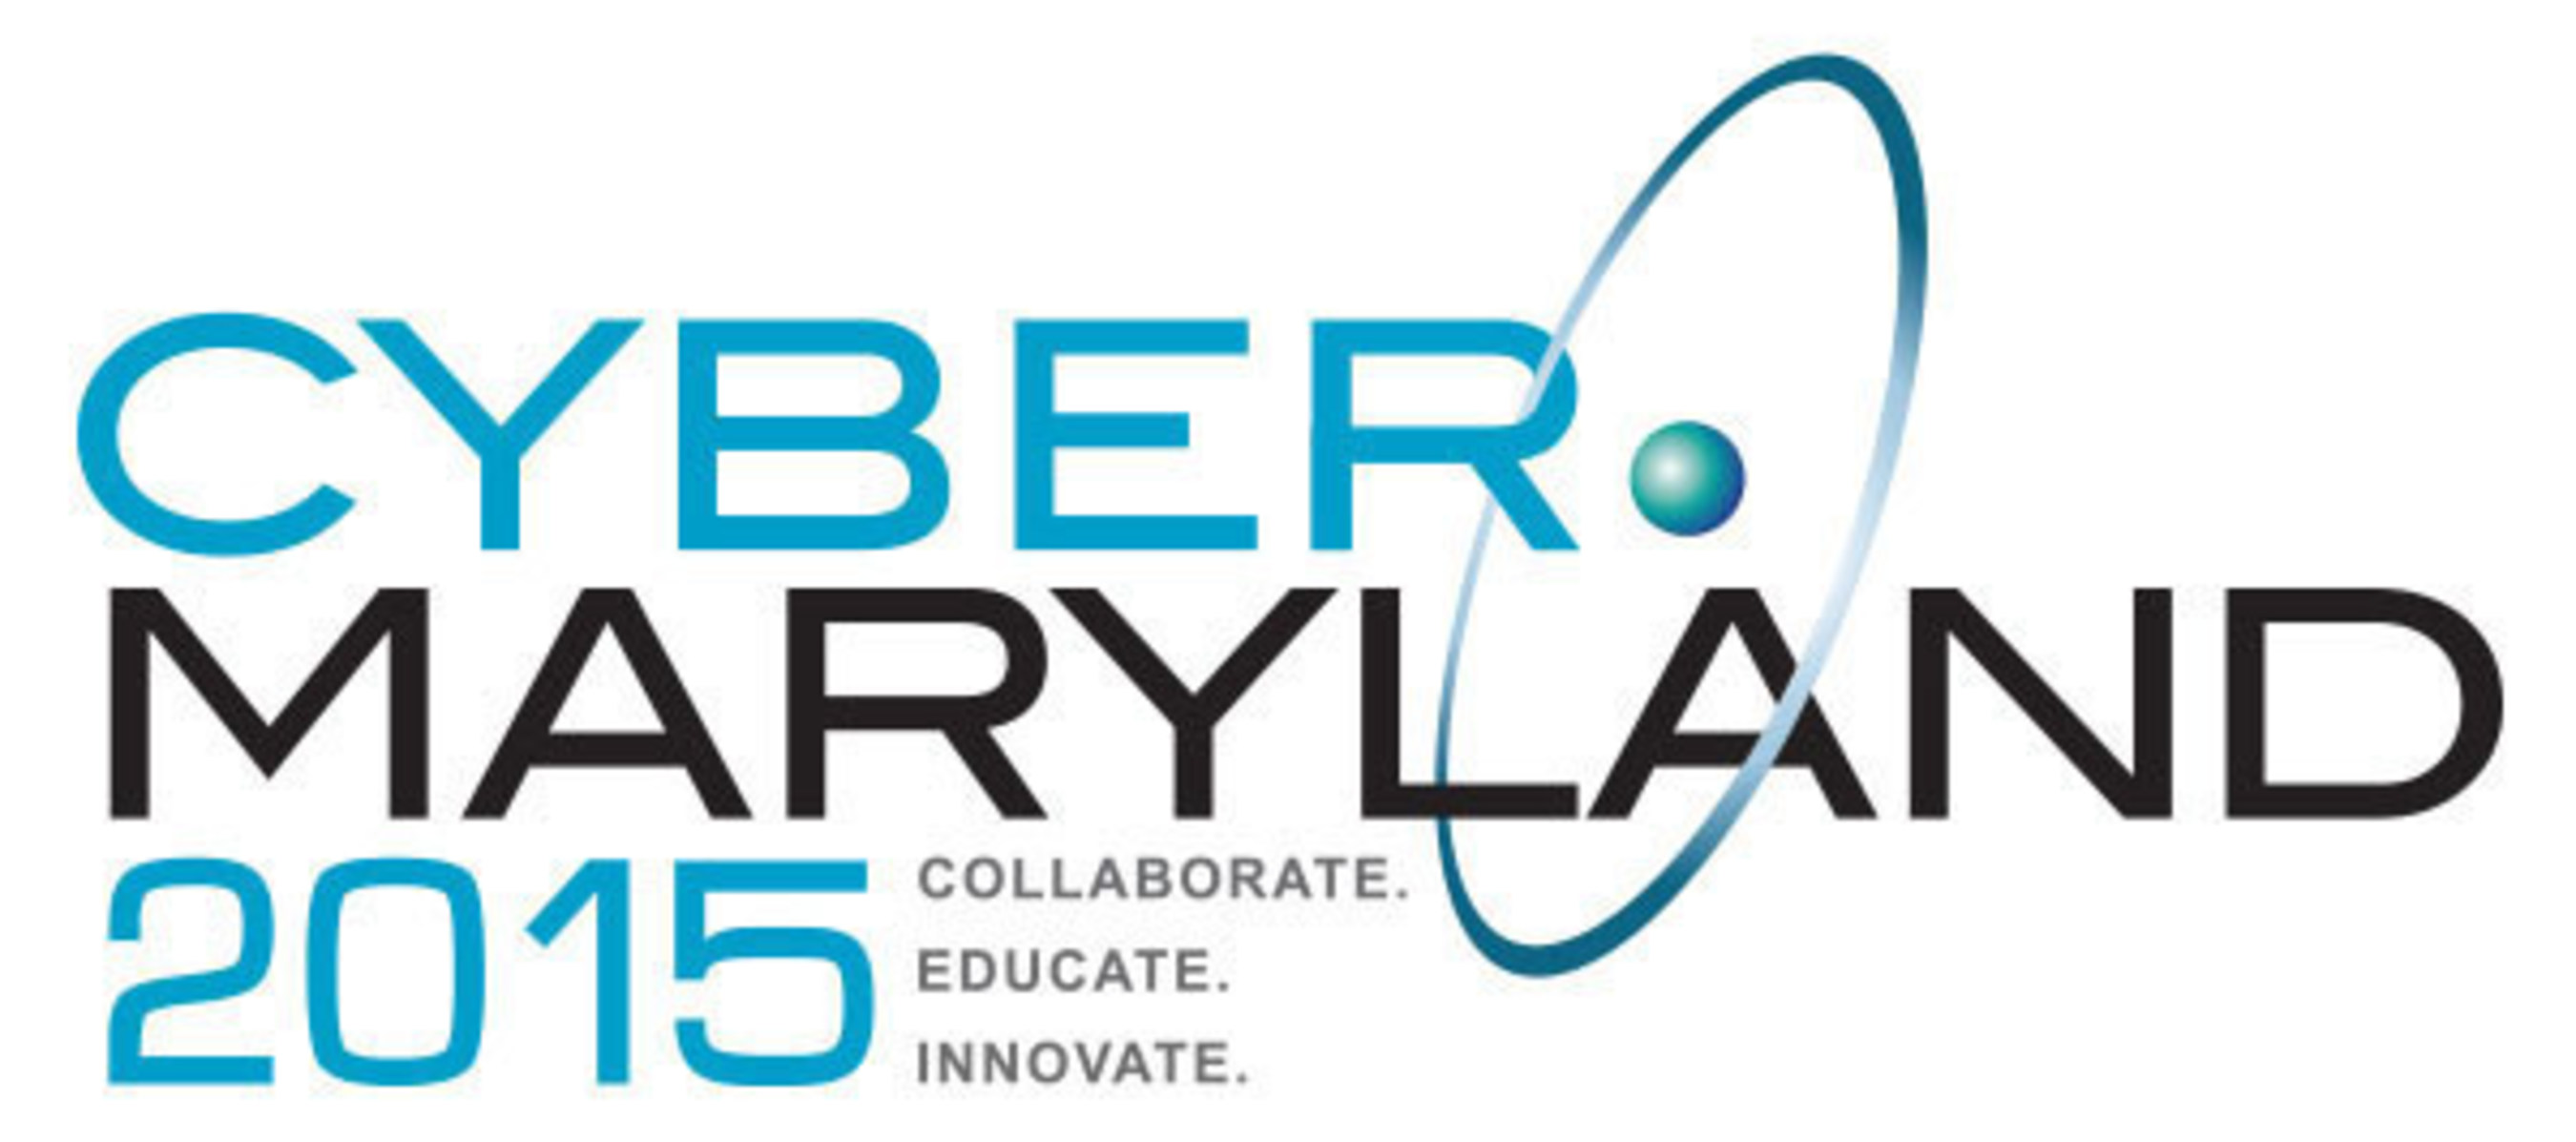 CyberMaryland 2015 www.cybermarylandconference.com